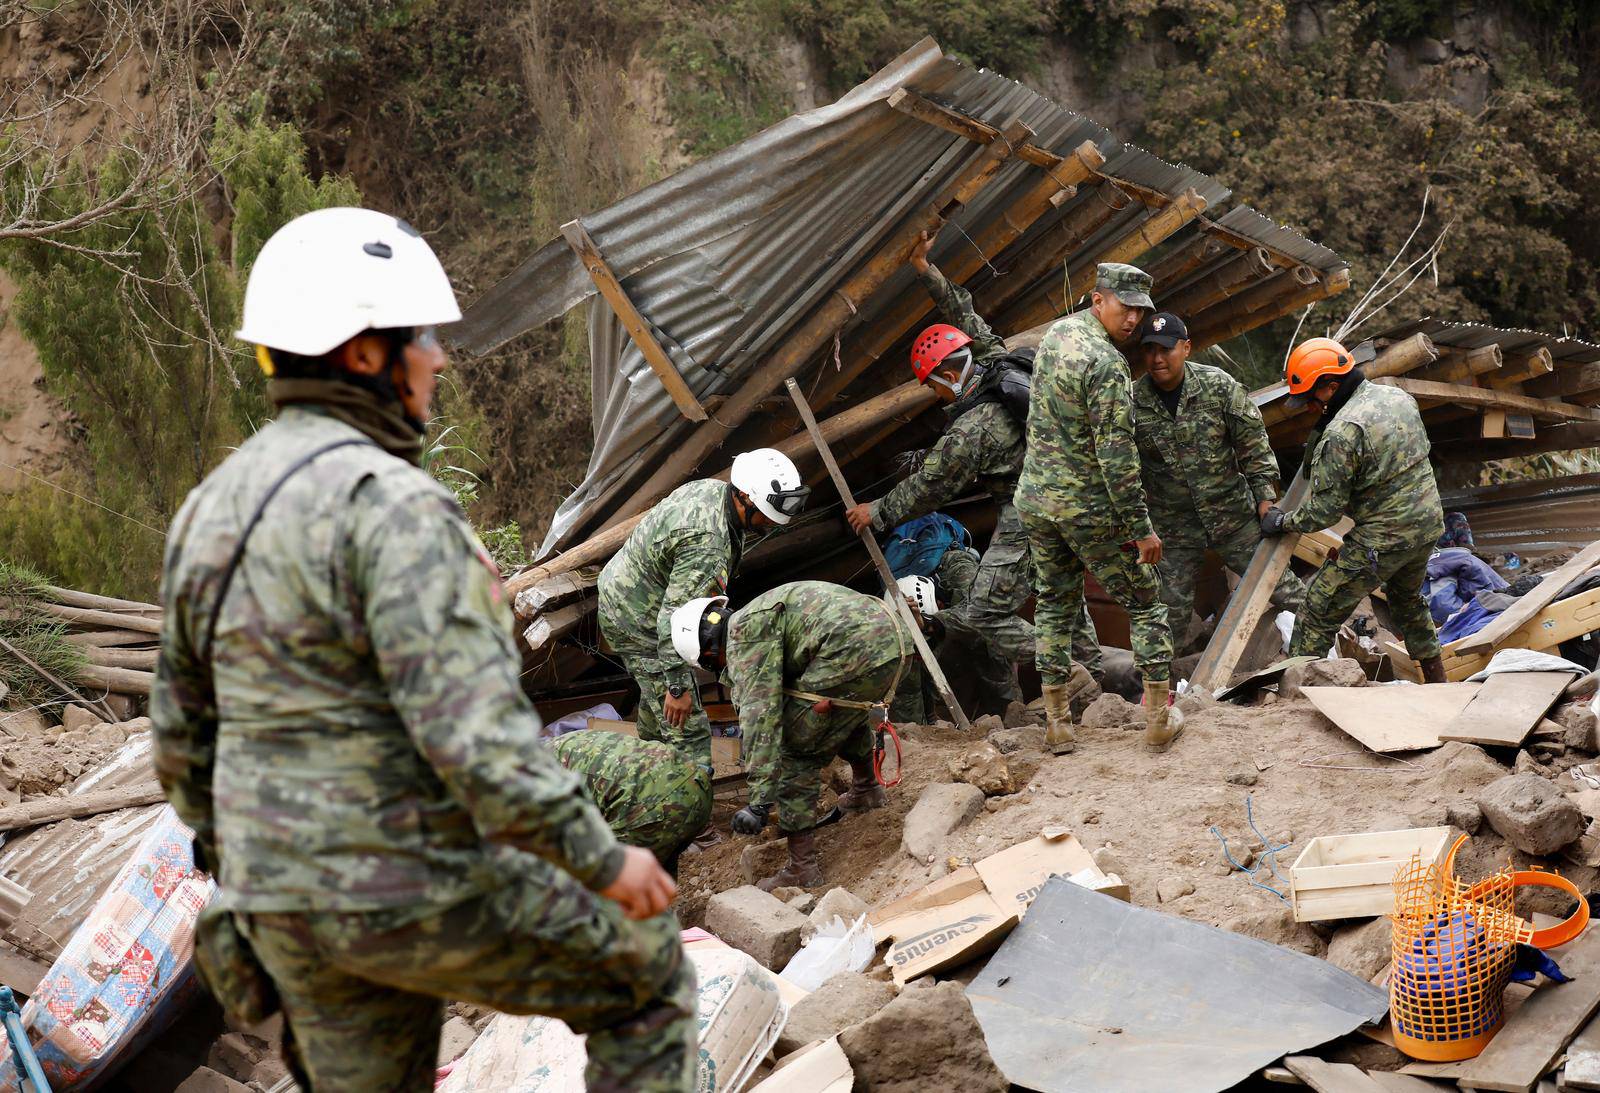 Aftermath of landslide in Alausi